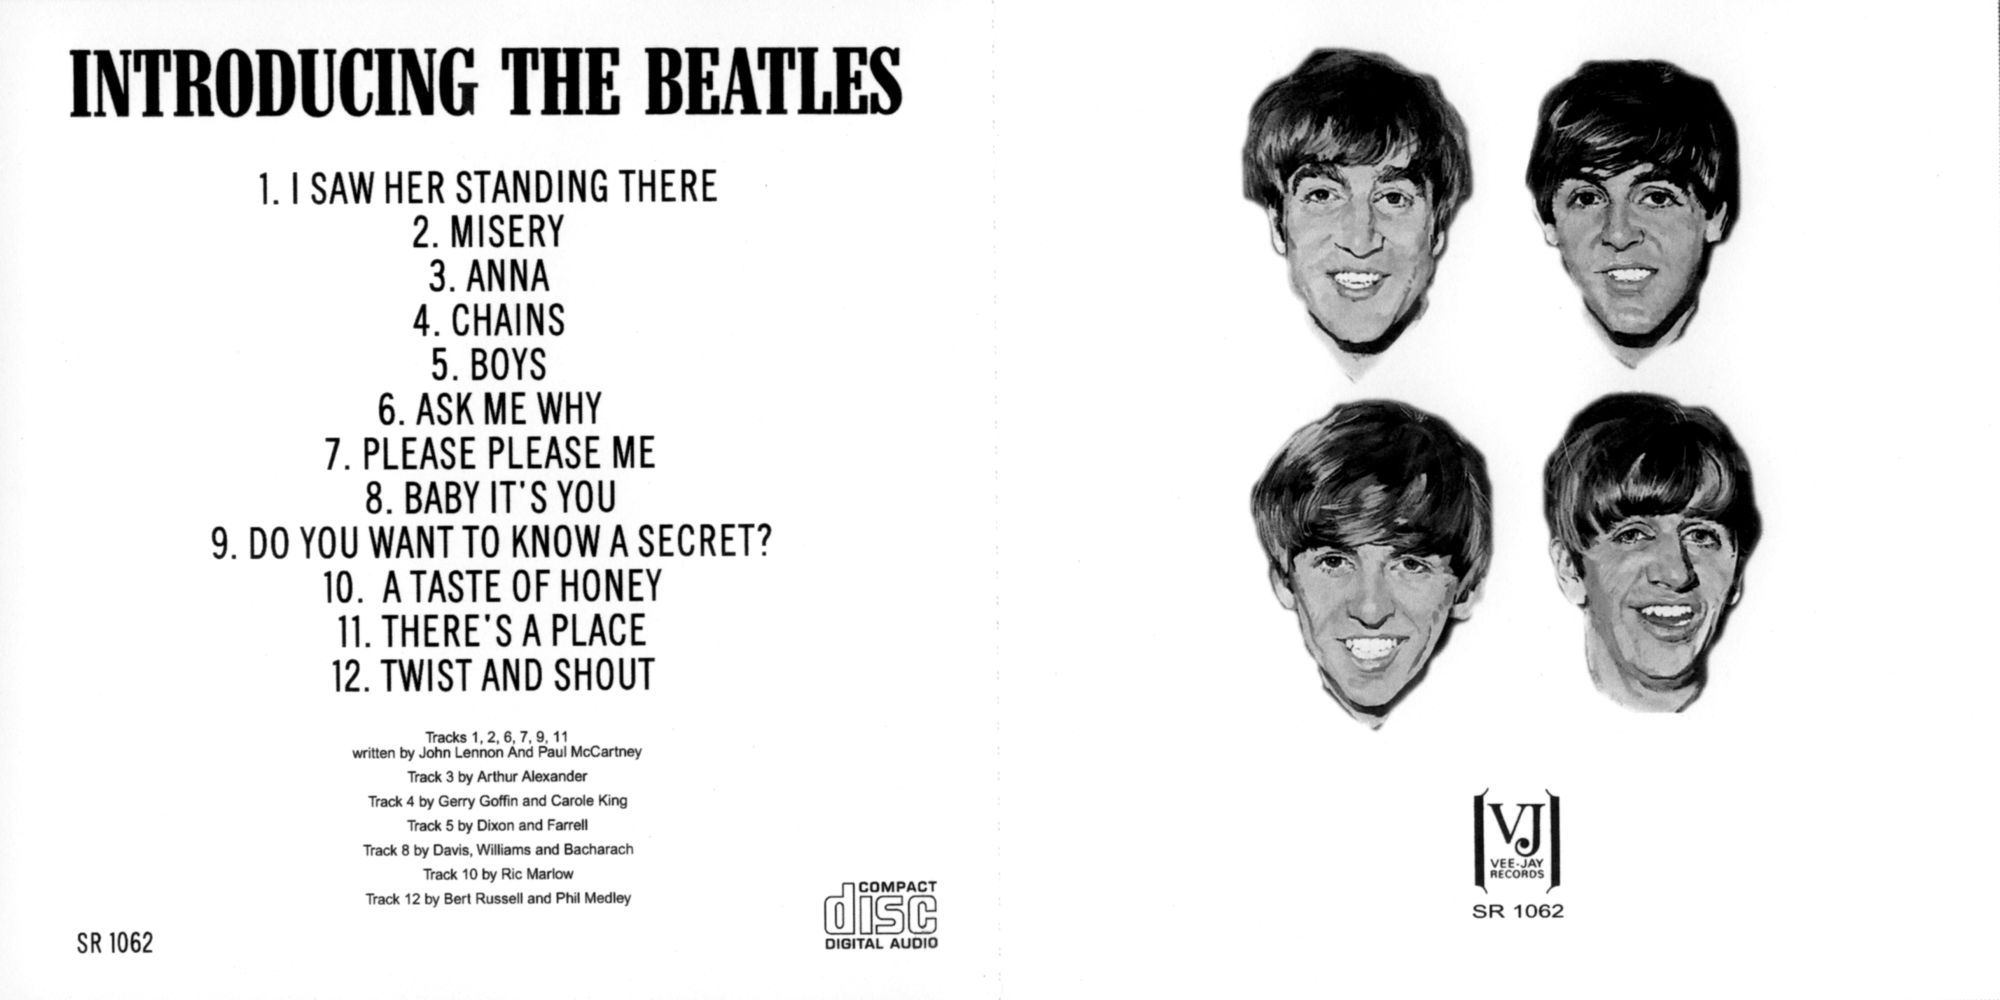 The beatles перевод песен. Introducing the Beatles 1964. Битлз 1964 альбом. Американские пластинки Битлз. Битлз альбомы в США.